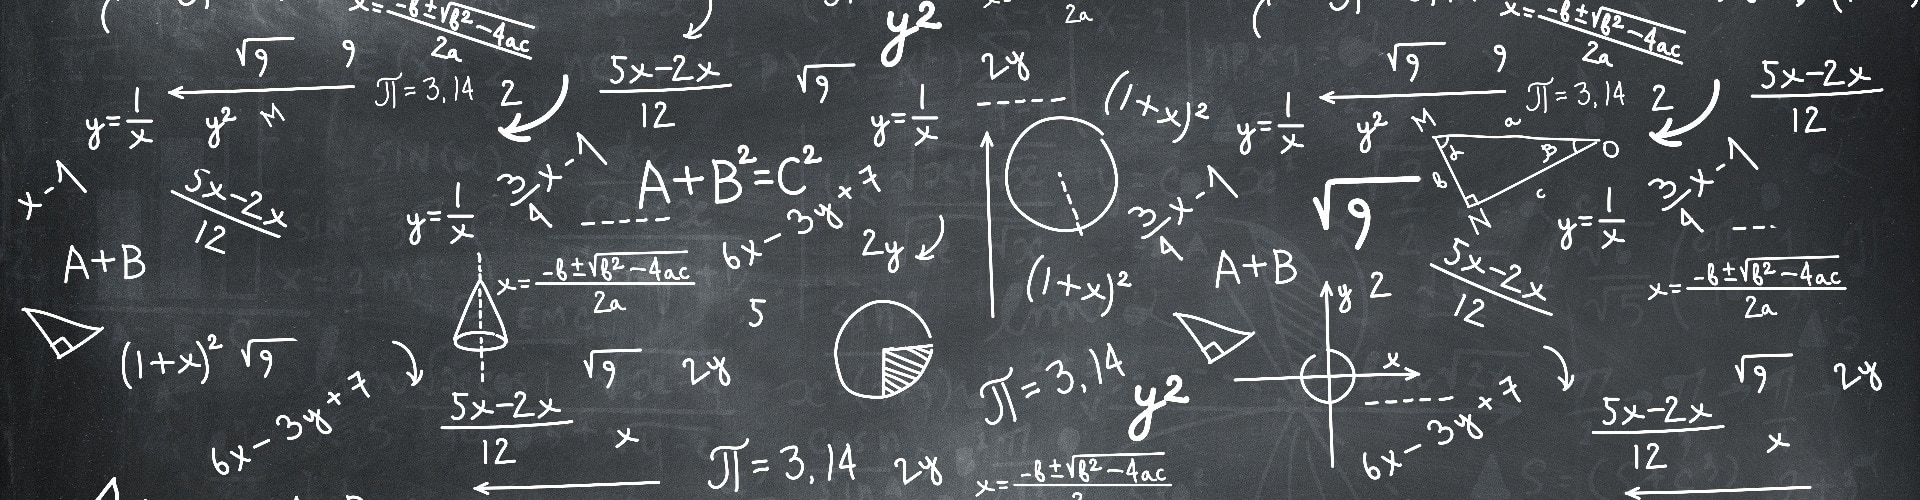 mathematical calculation on blackboard - Banner design